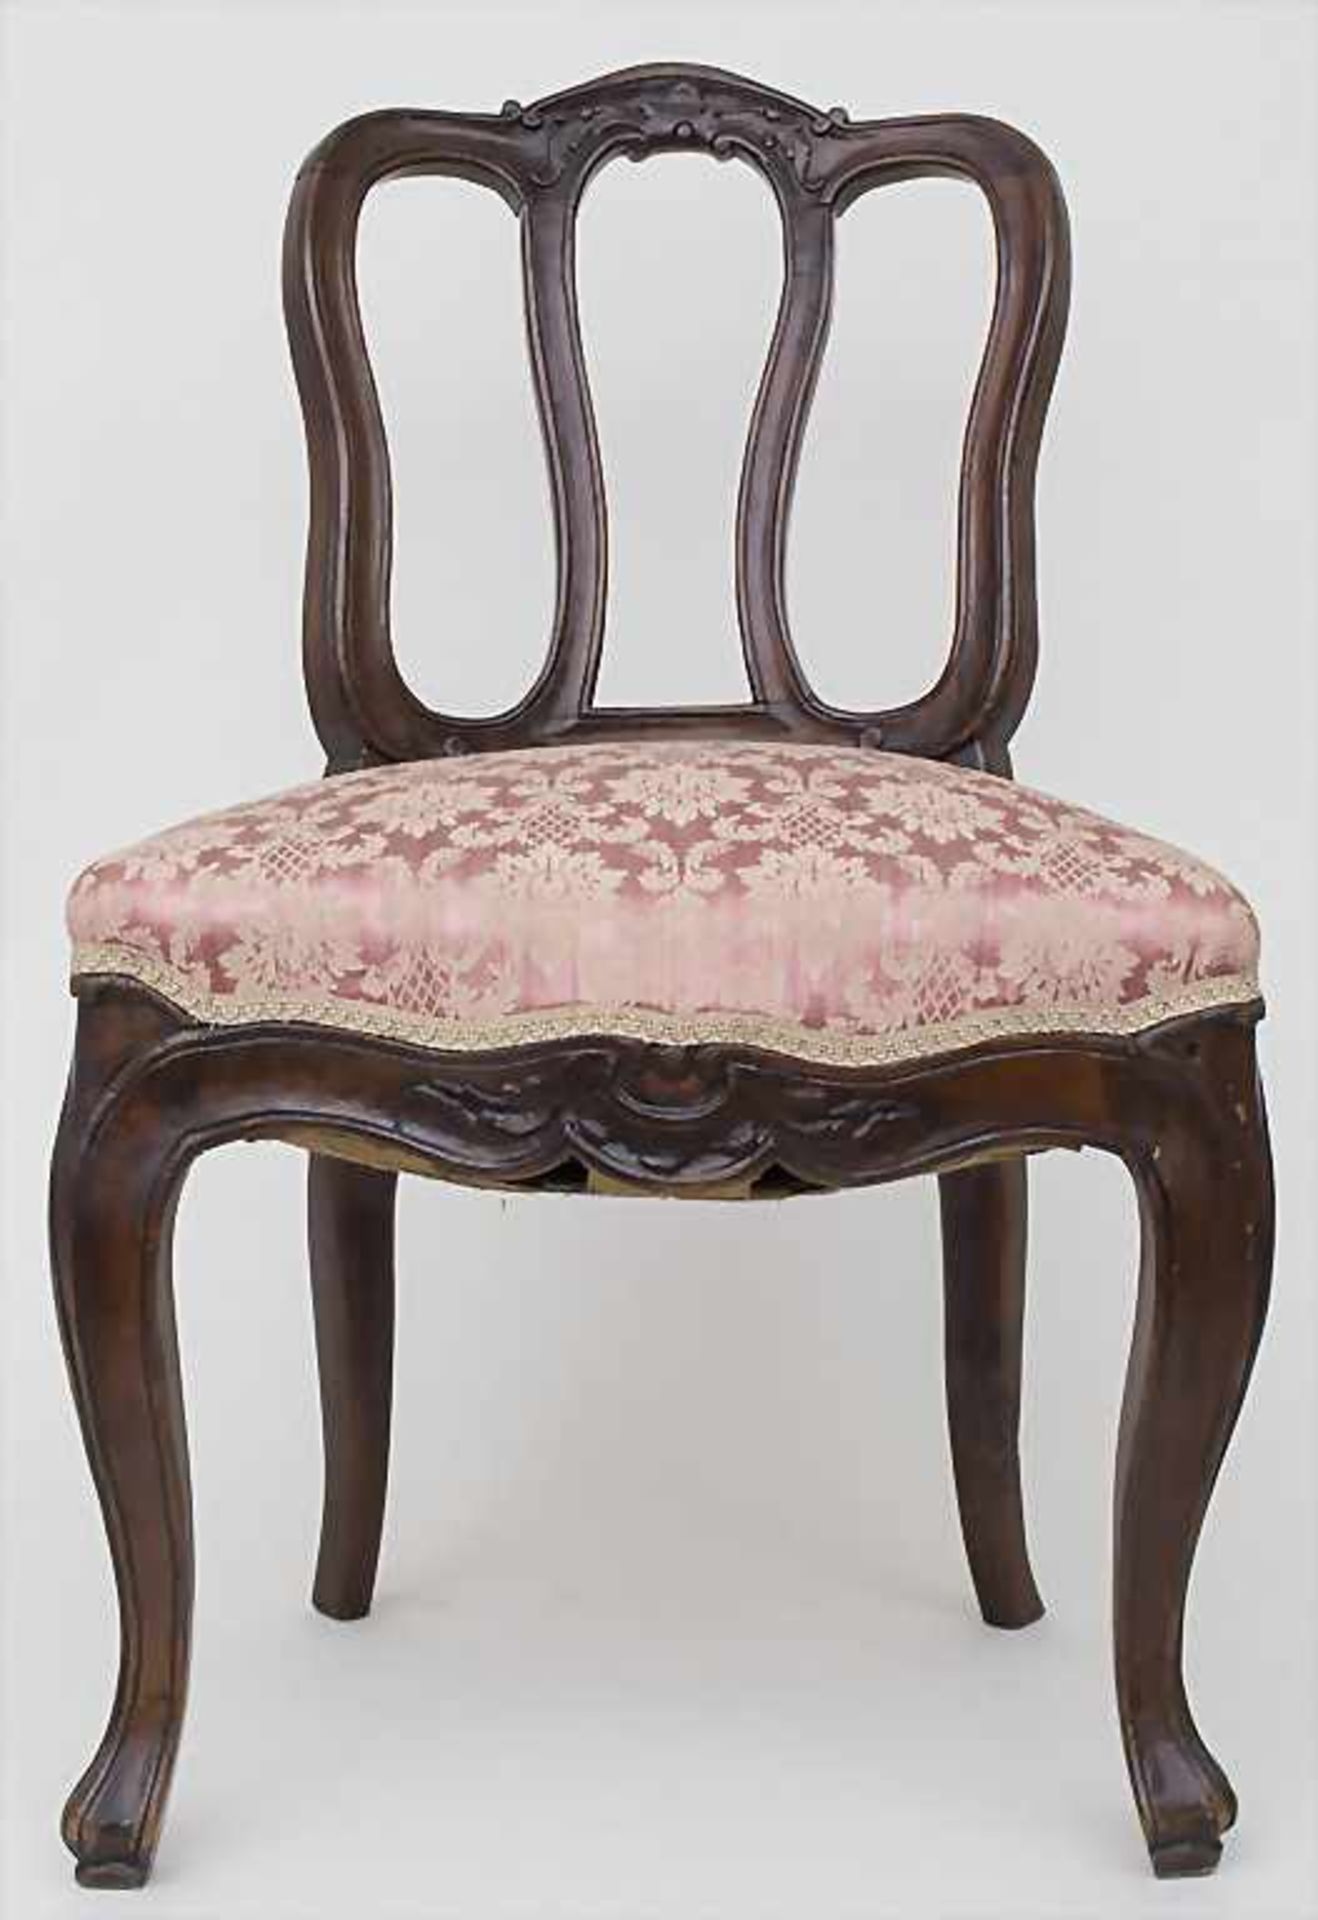 Rokoko Stuhl mit Rocailledekor / A Rococo chair with Rocailles, 18. Jh.Material: Holz, geschnitzt,